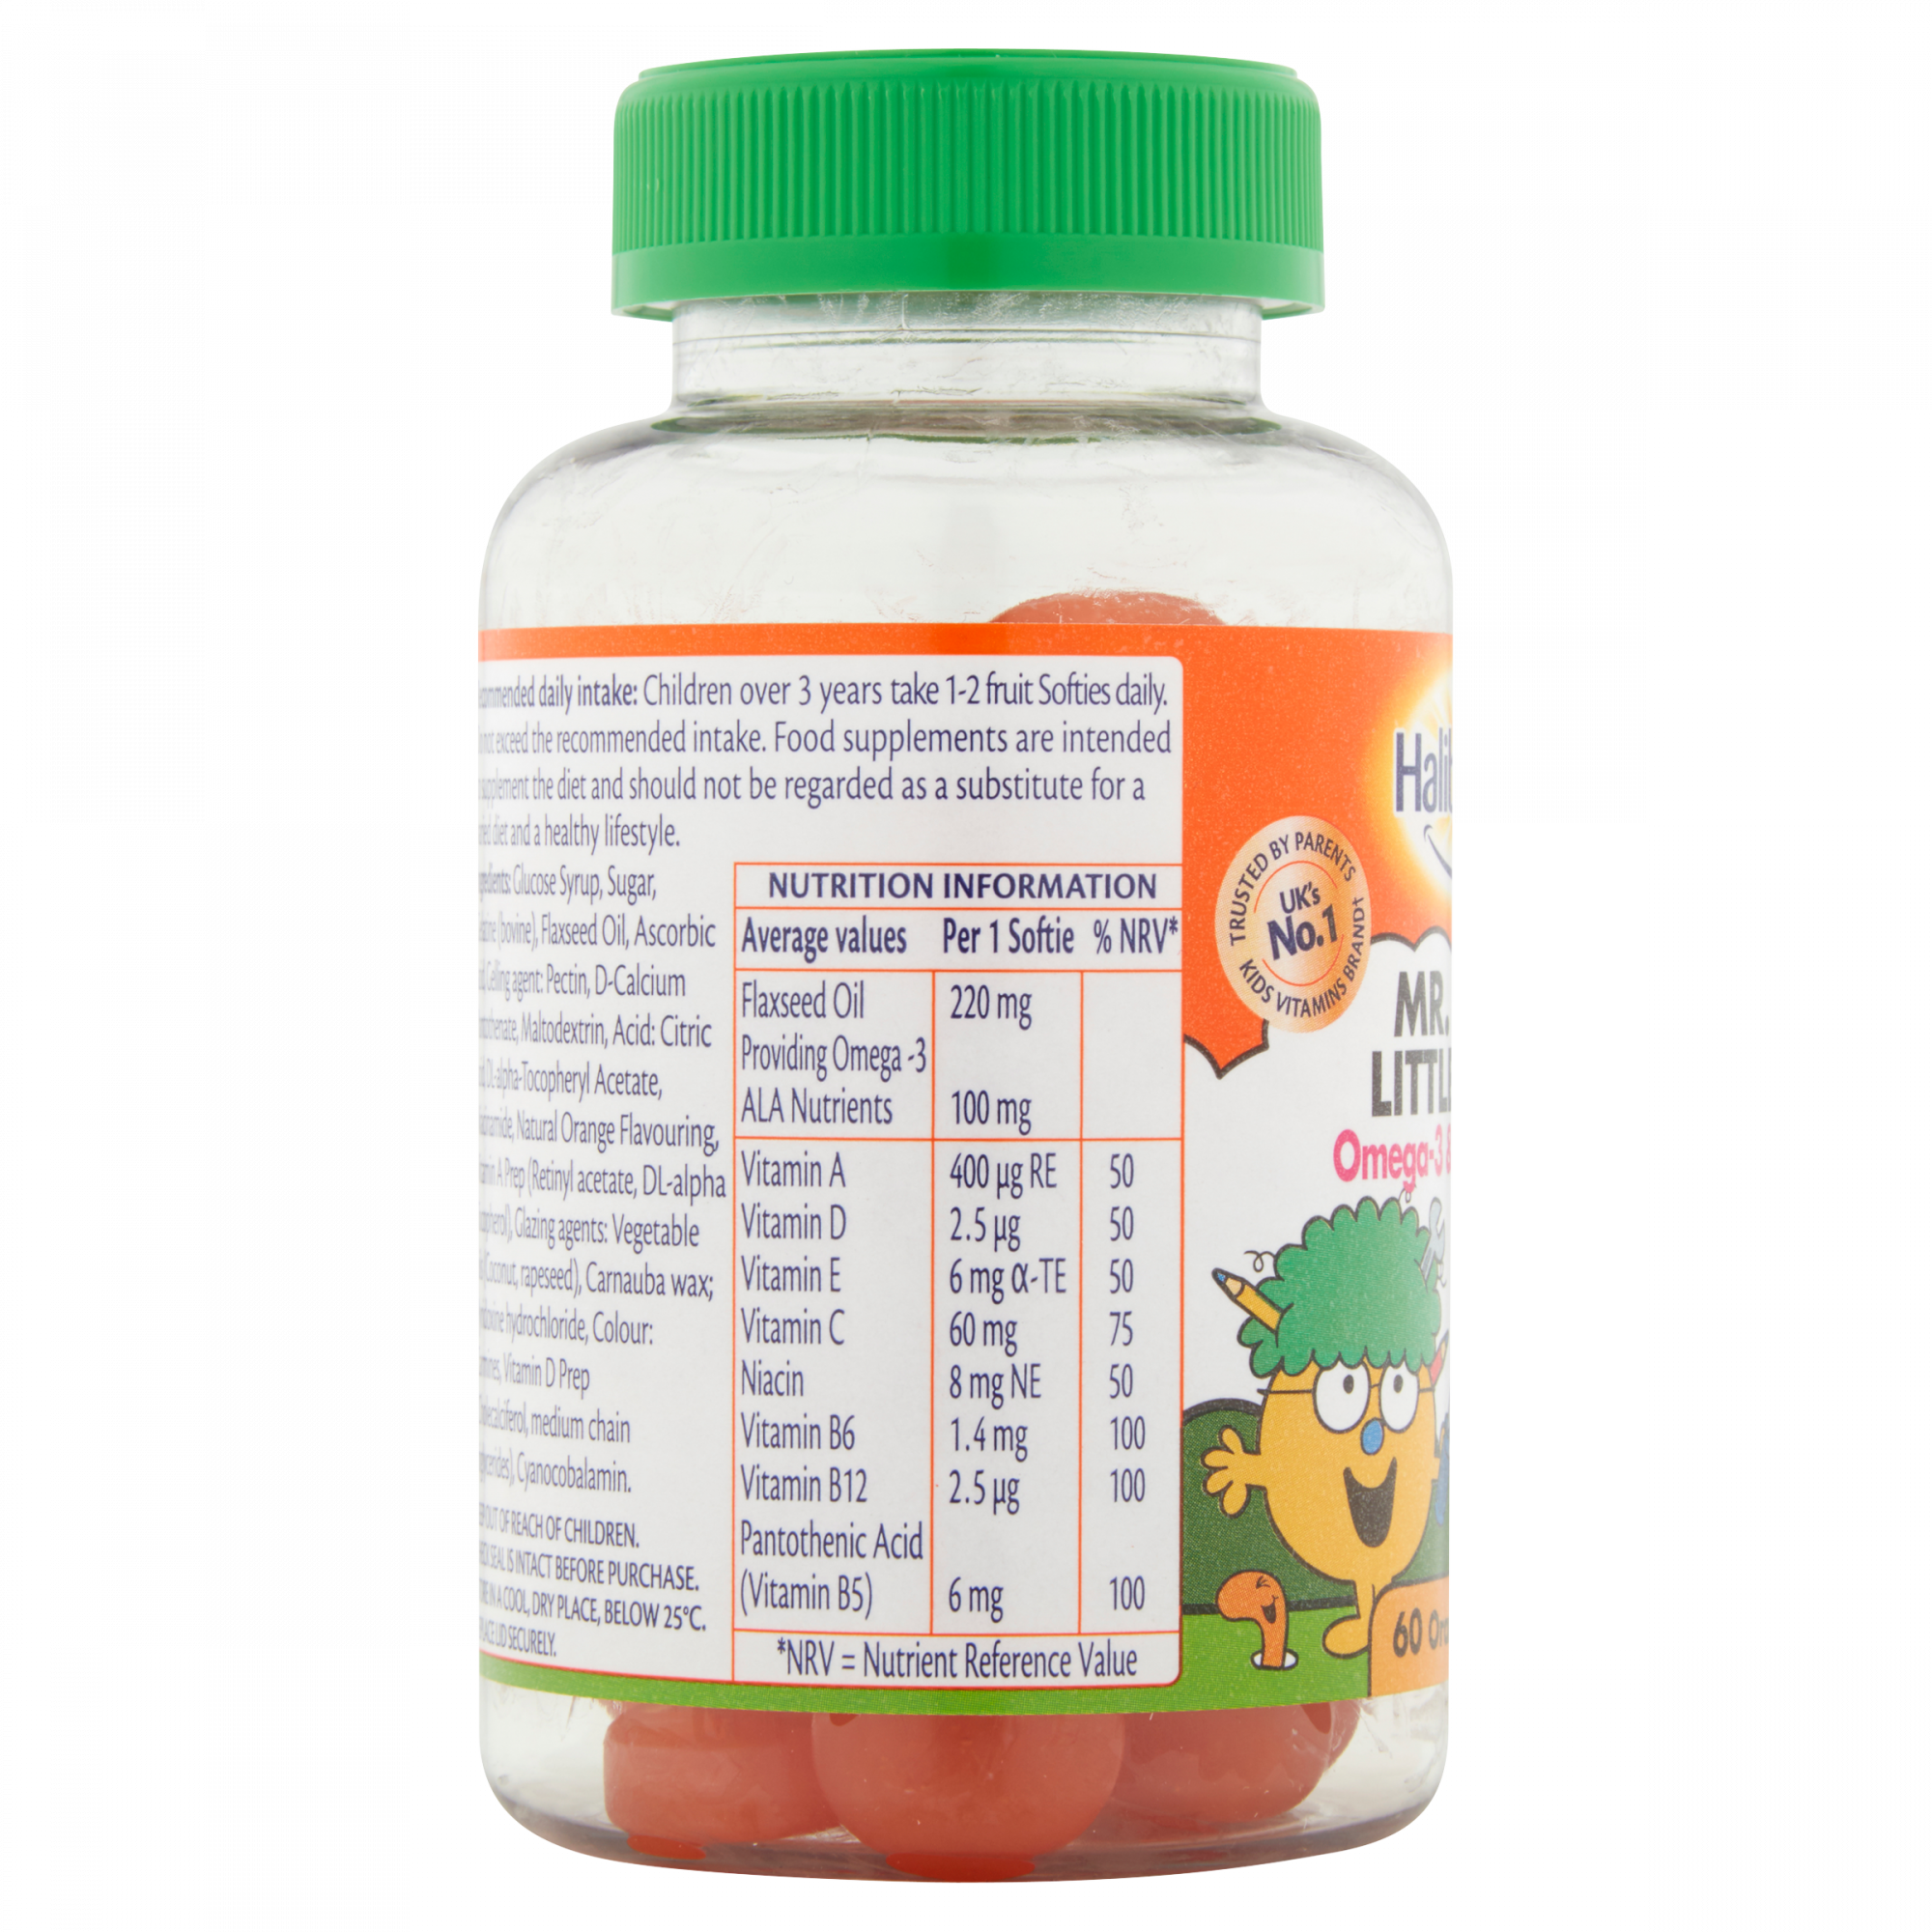 Haliborange Mr. Men Little Miss Omega-3 & Multivitamins 60 Orange Softies For Kids 3-7